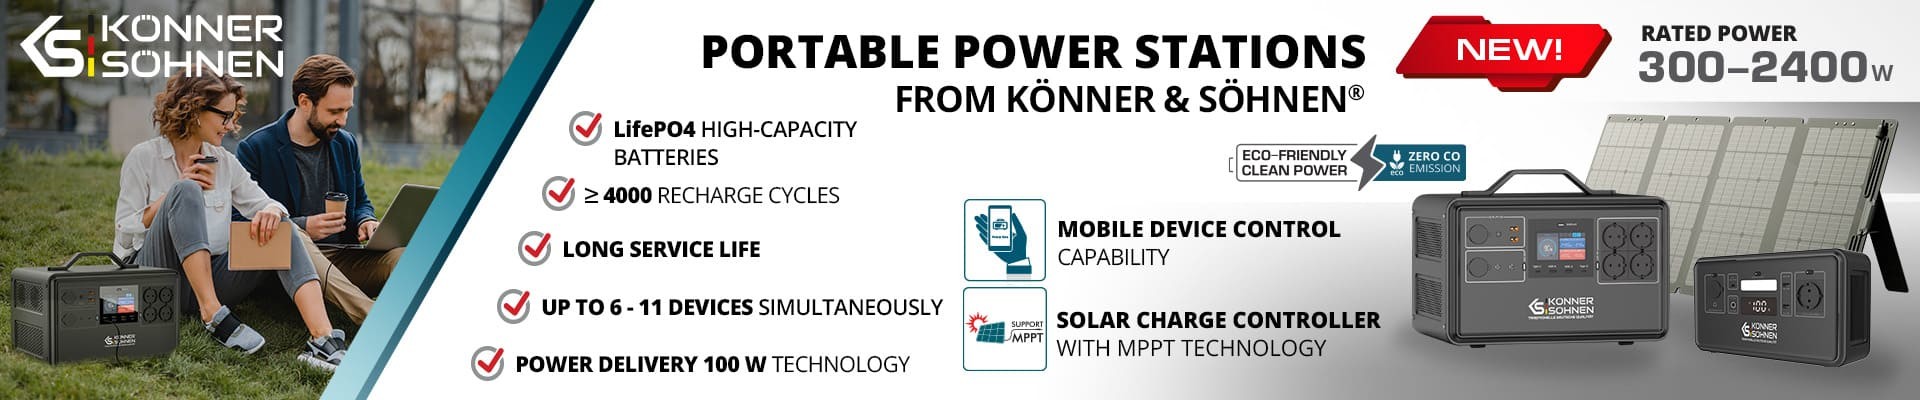 portable-power-stations-ks-lifepo4_en